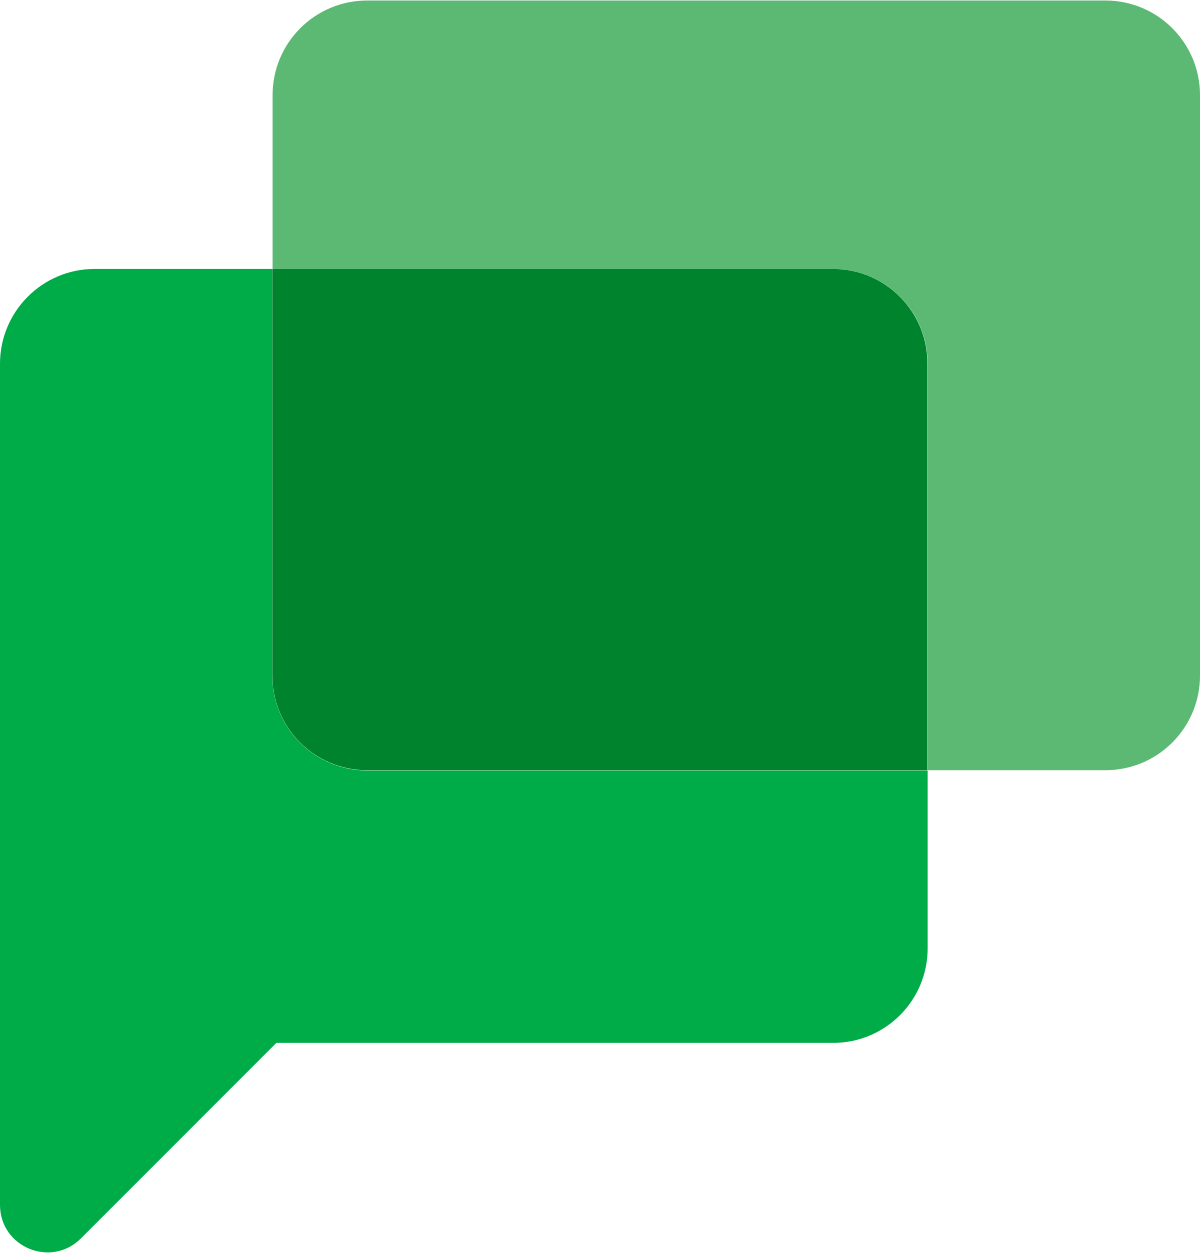 google hangouts logo